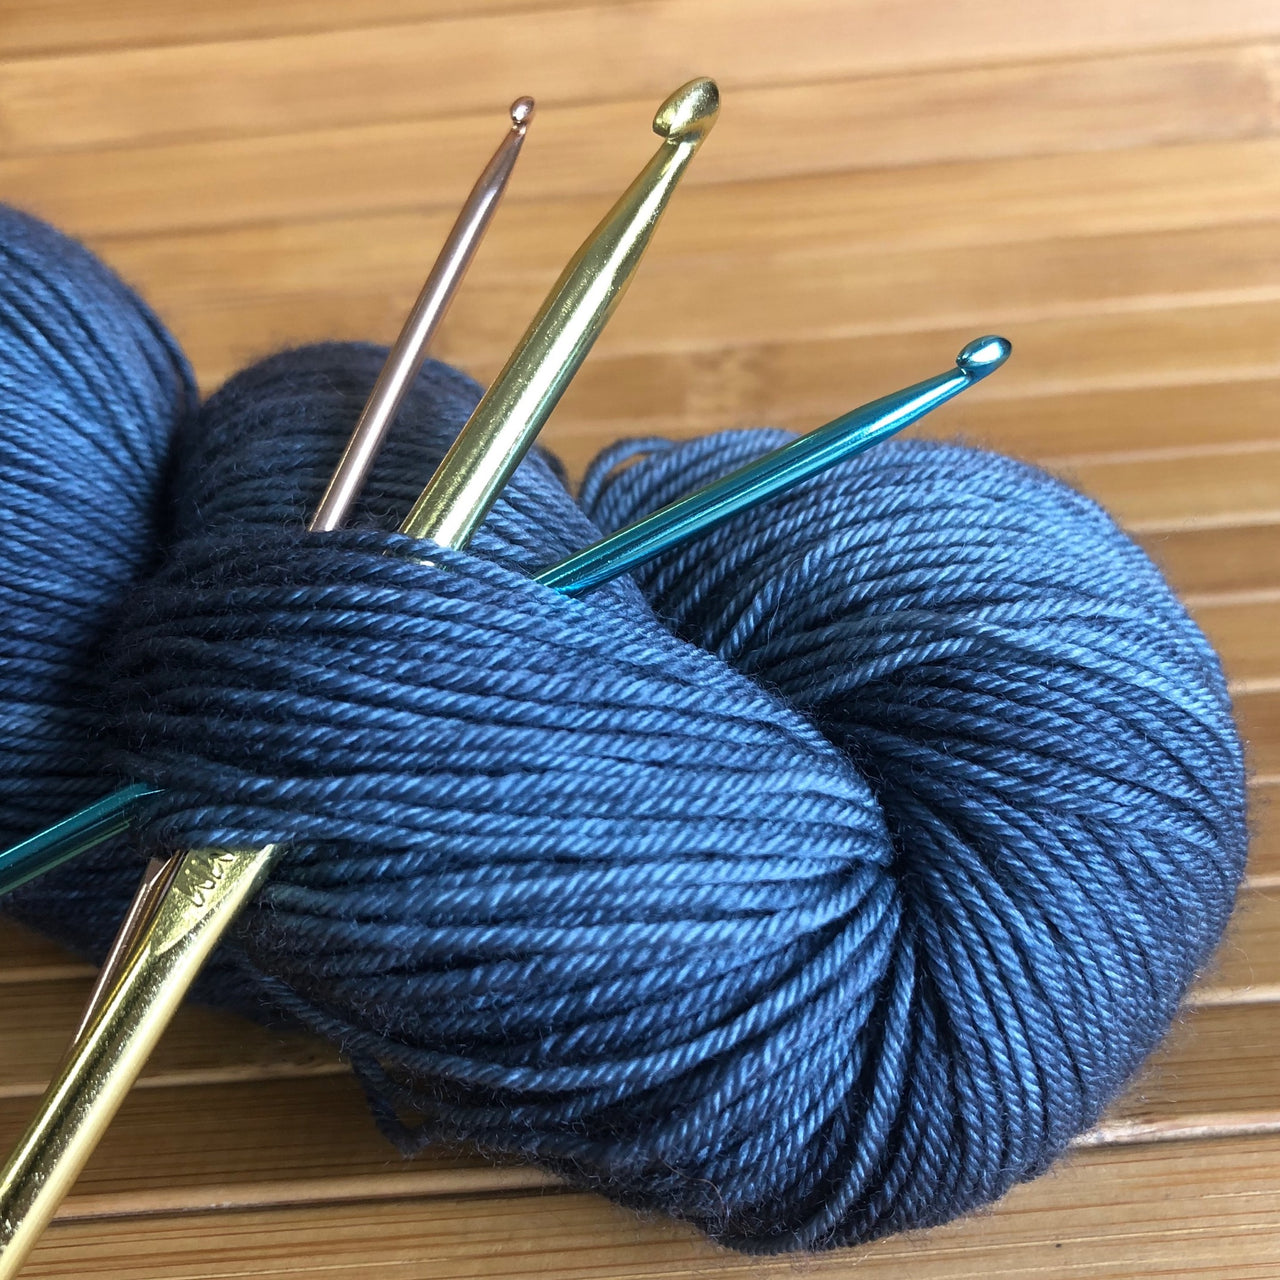 Beginning Crochet Series